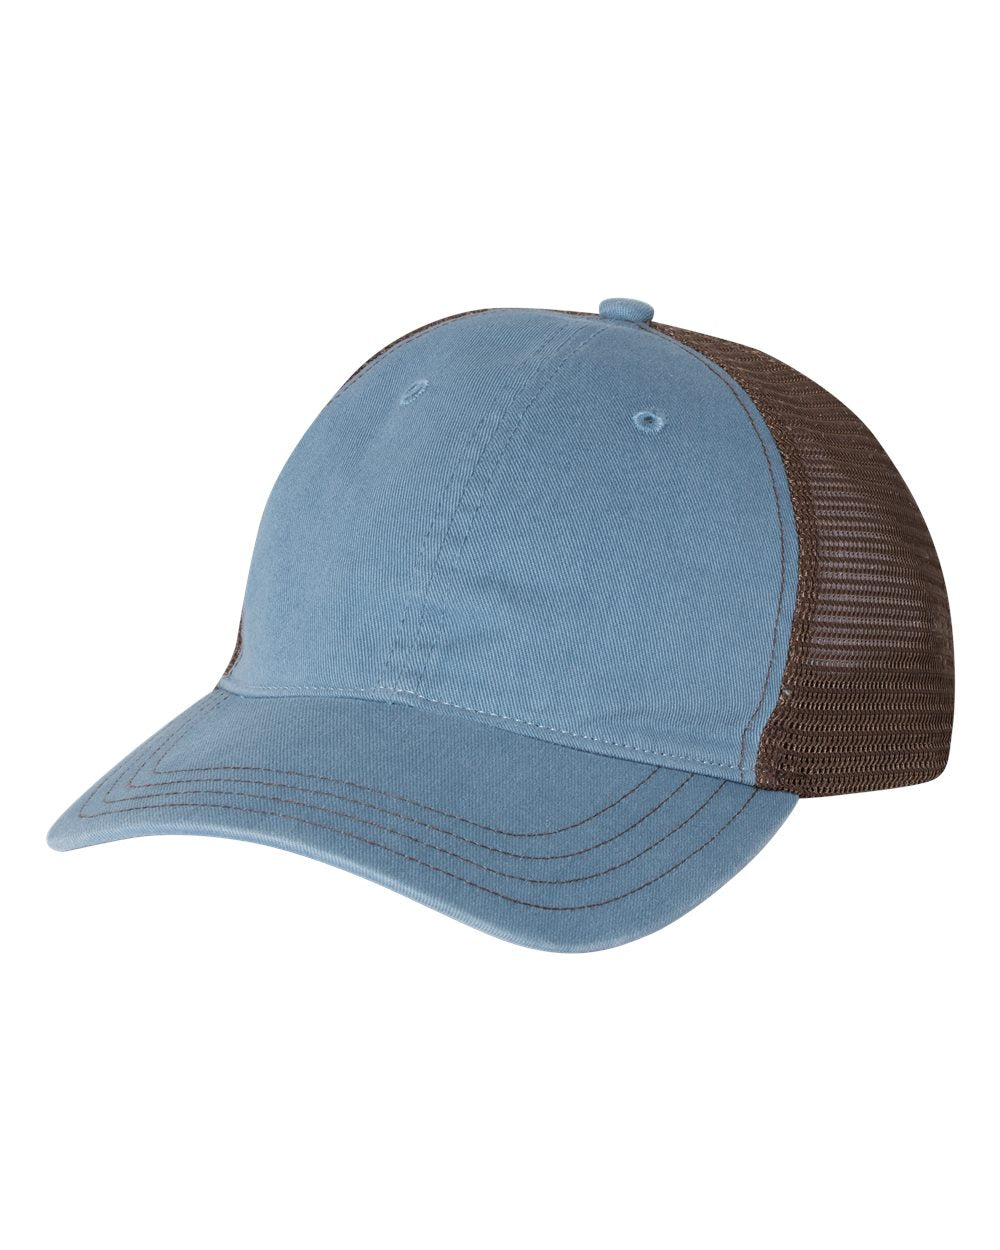 richardson cap blue and brown